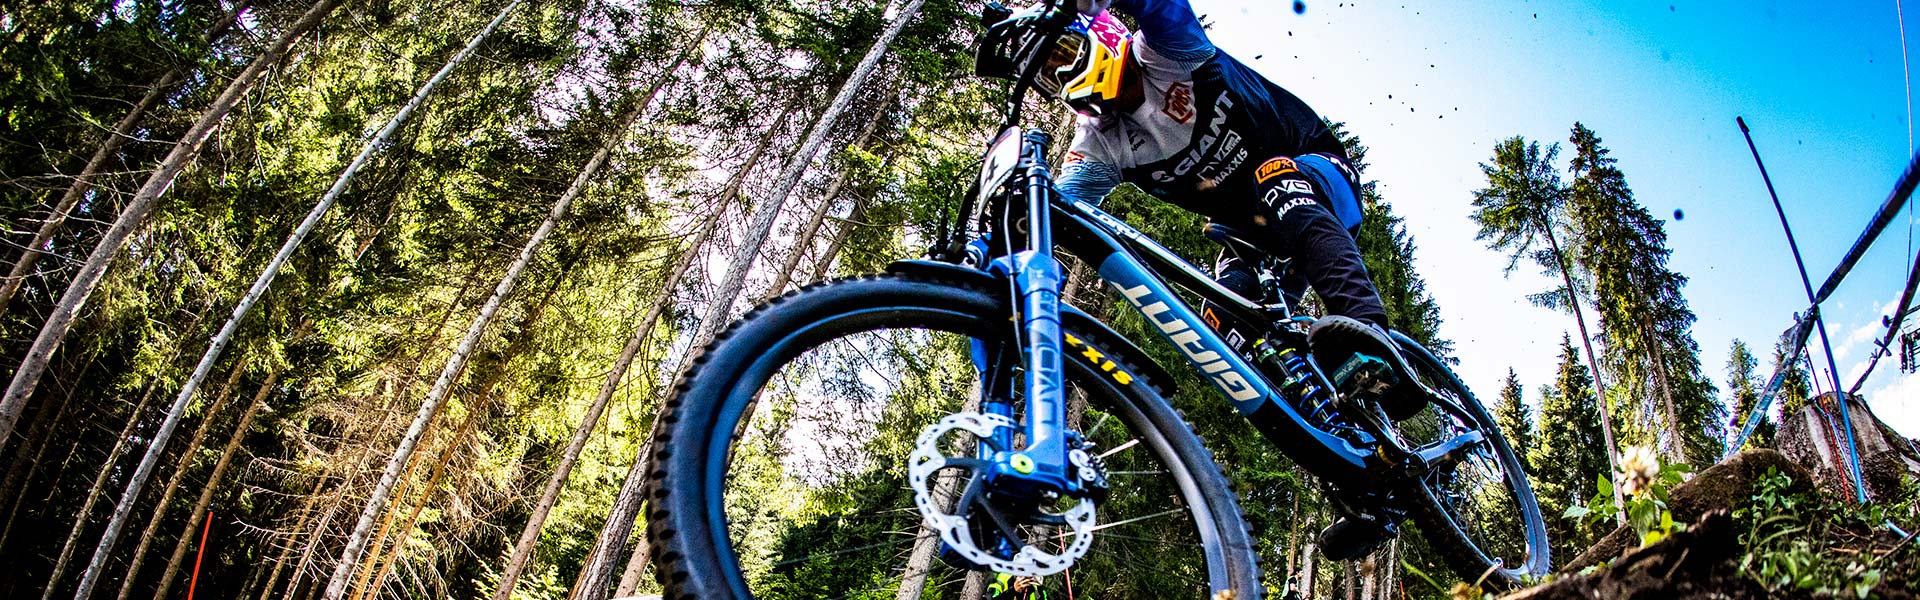 giant glory 1 2017 full suspension mountain bike blue